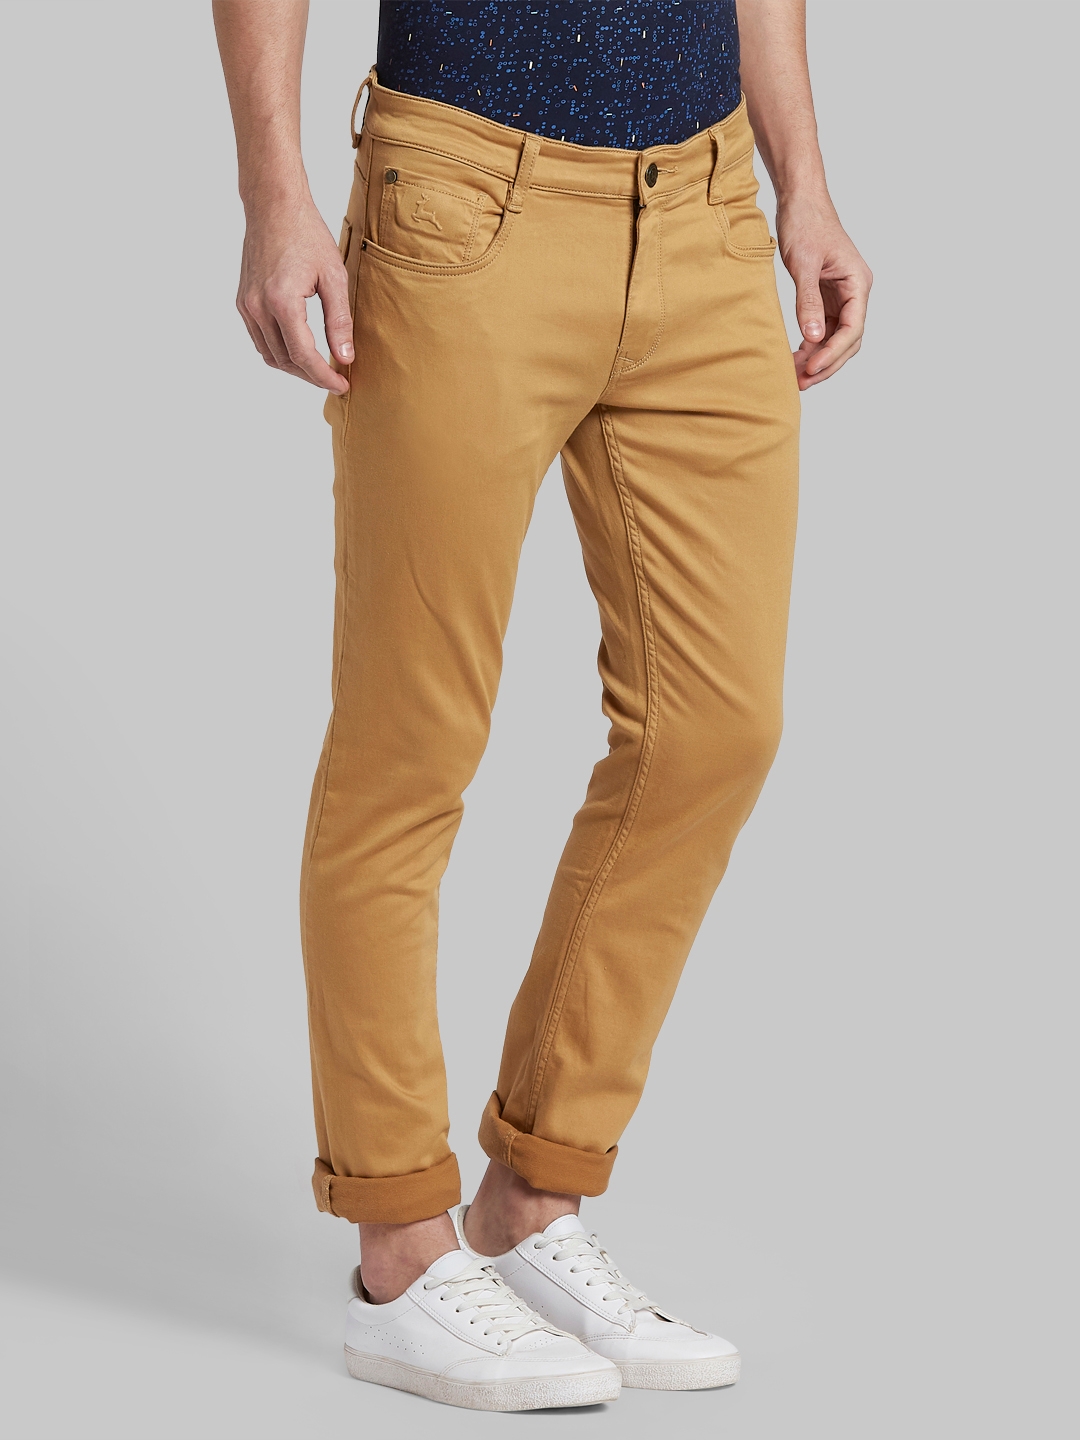 PARX | PARX Medium Khaki Jeans 1